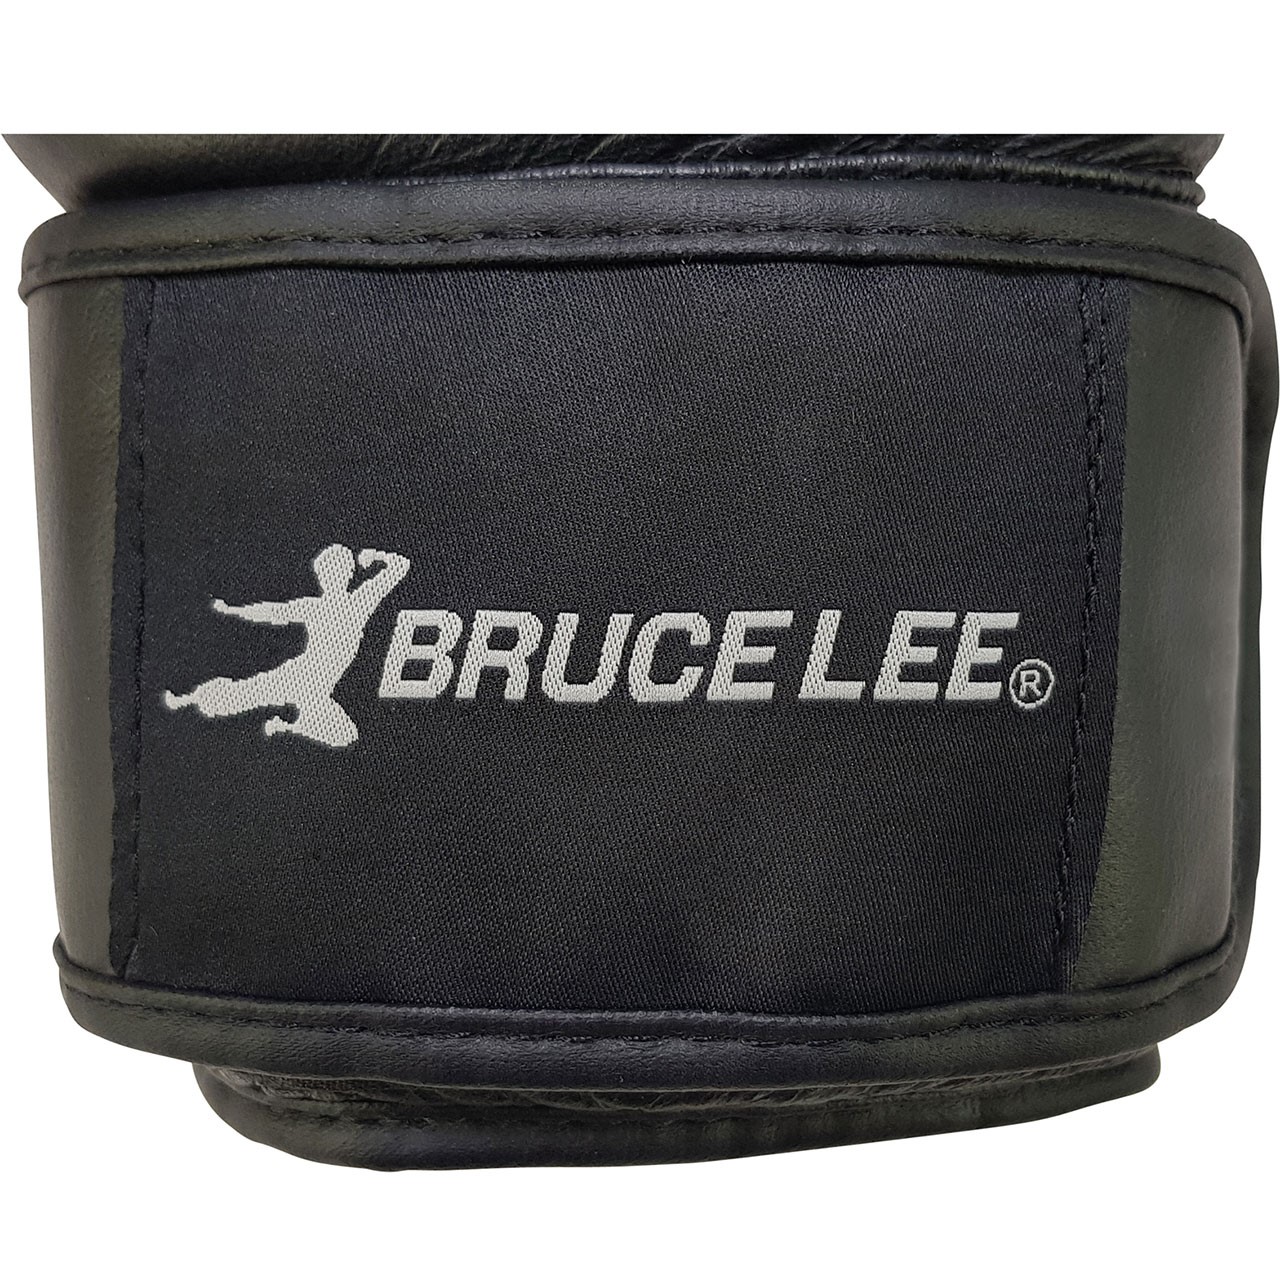 Bruce Lee Allround Boxing Glove Pro 